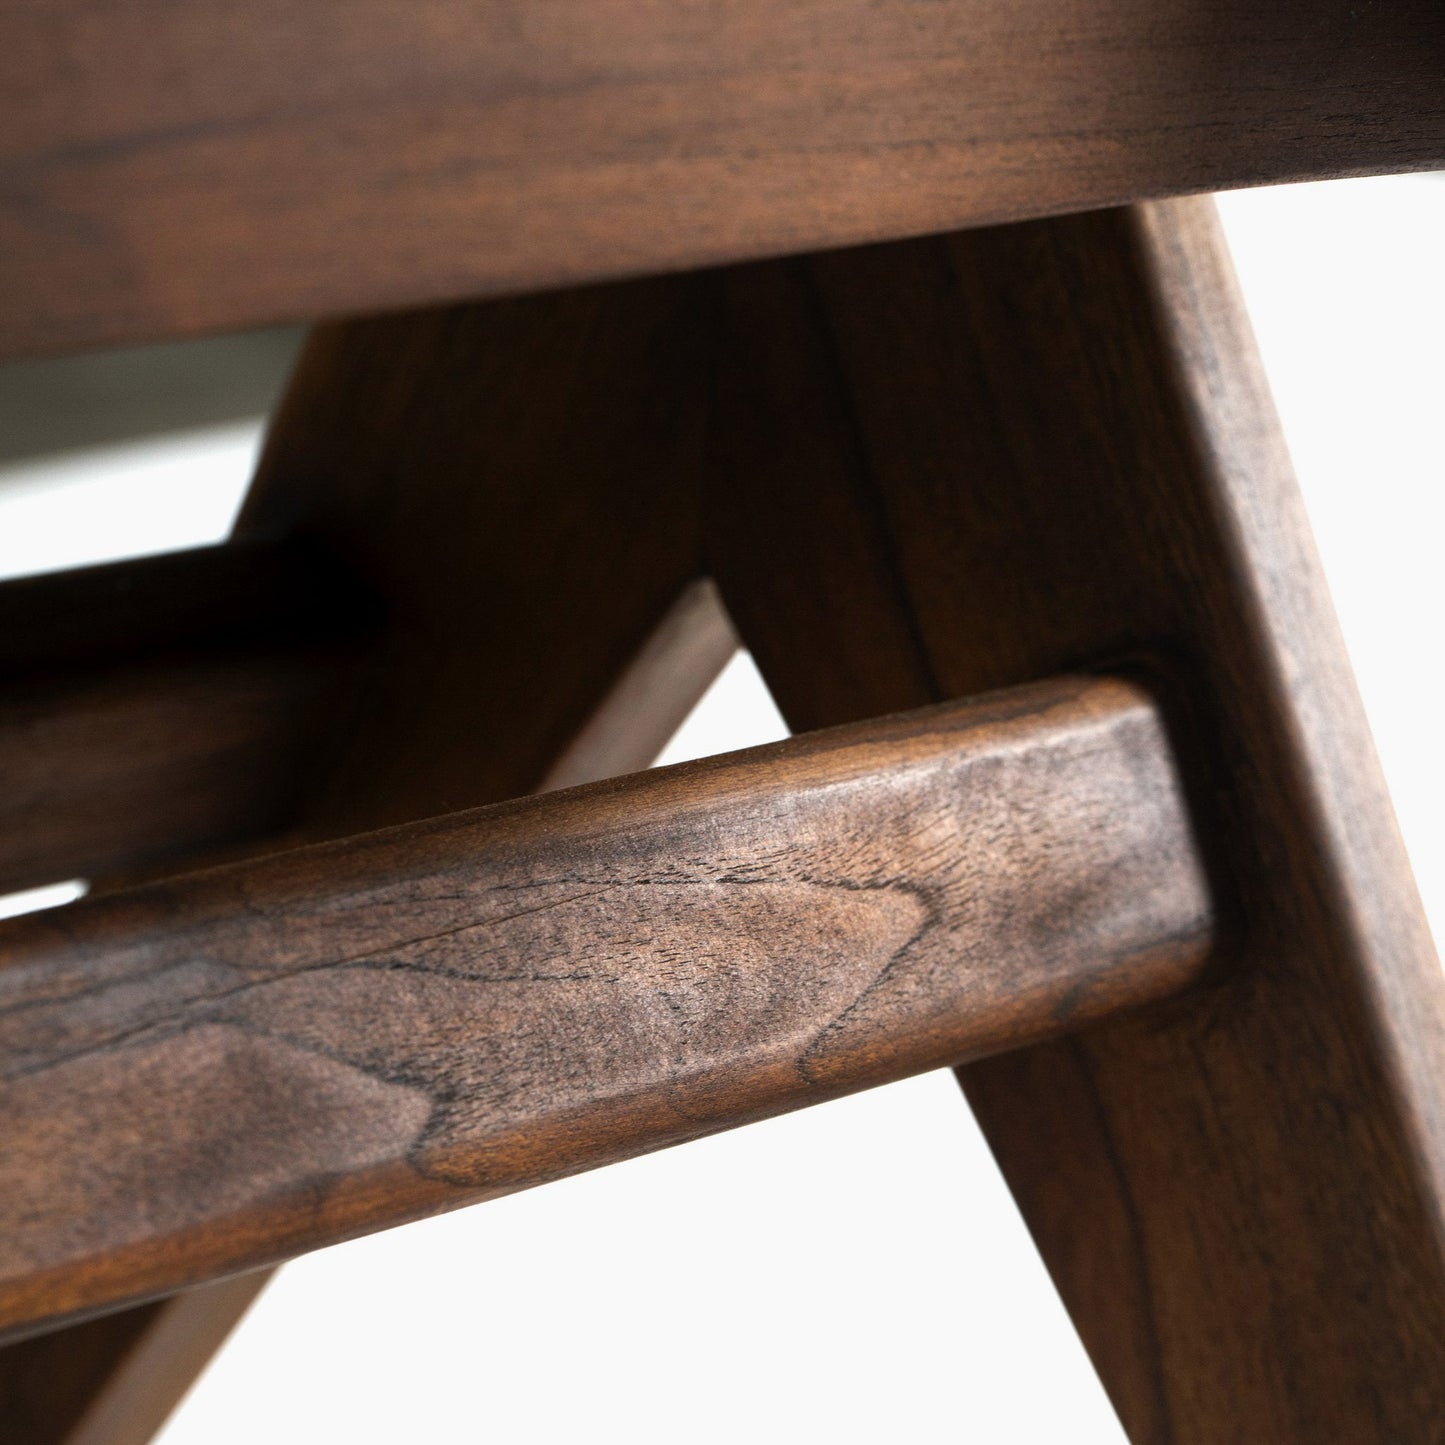 Jeanneret Armless Dining Chair - Black Teak - Floor Model - Grade A